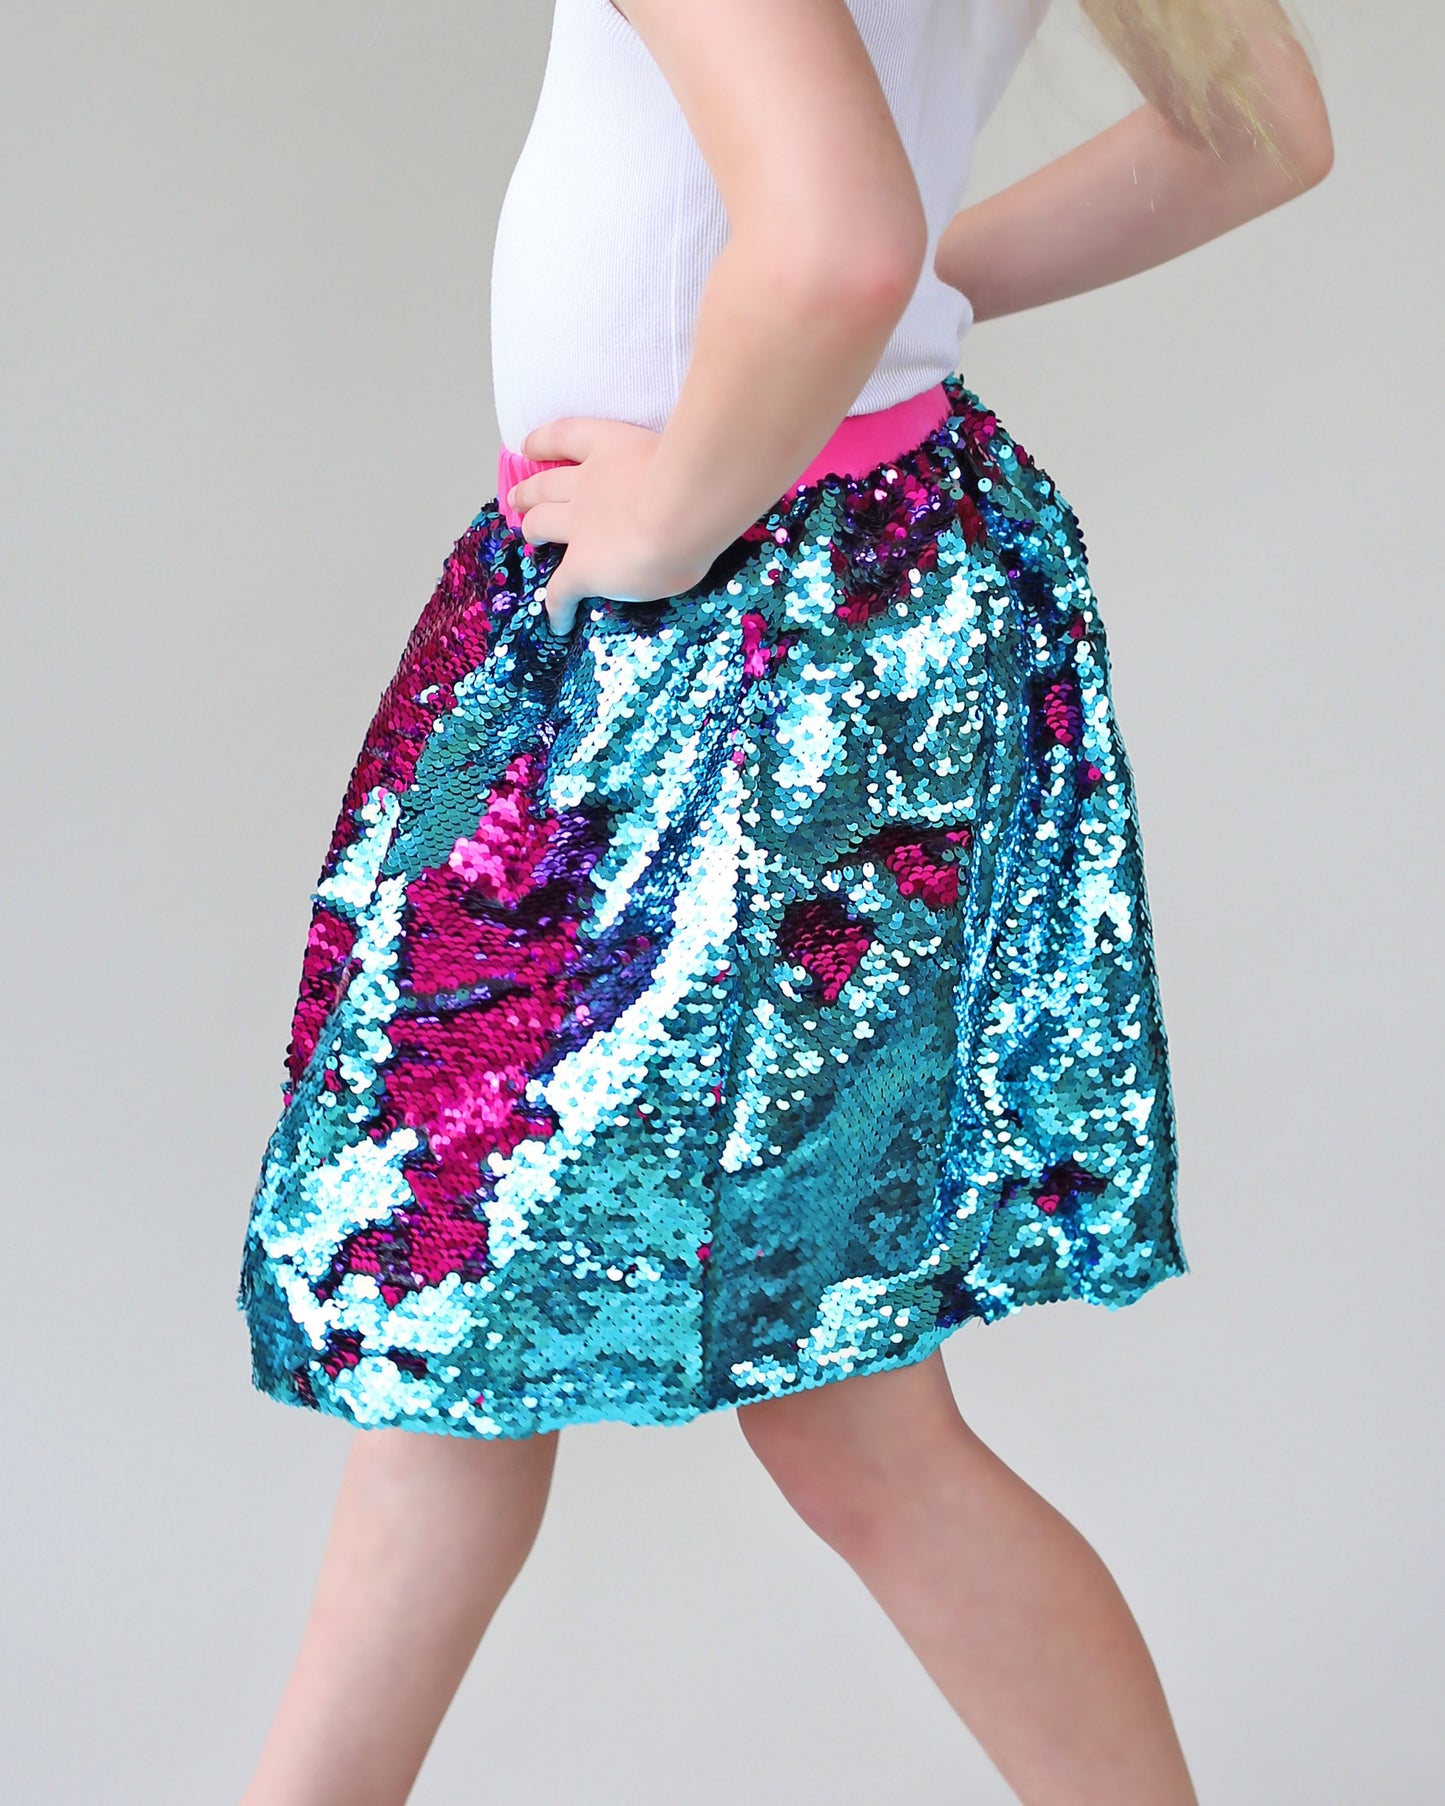 Aqua and Hot Pink Flip Bubble Skirt - Aqua and Hot Pink Skirt - Magic Sequin Skirt - Birthday Skirt - Party Bubble Skirt - Twirly Skirt